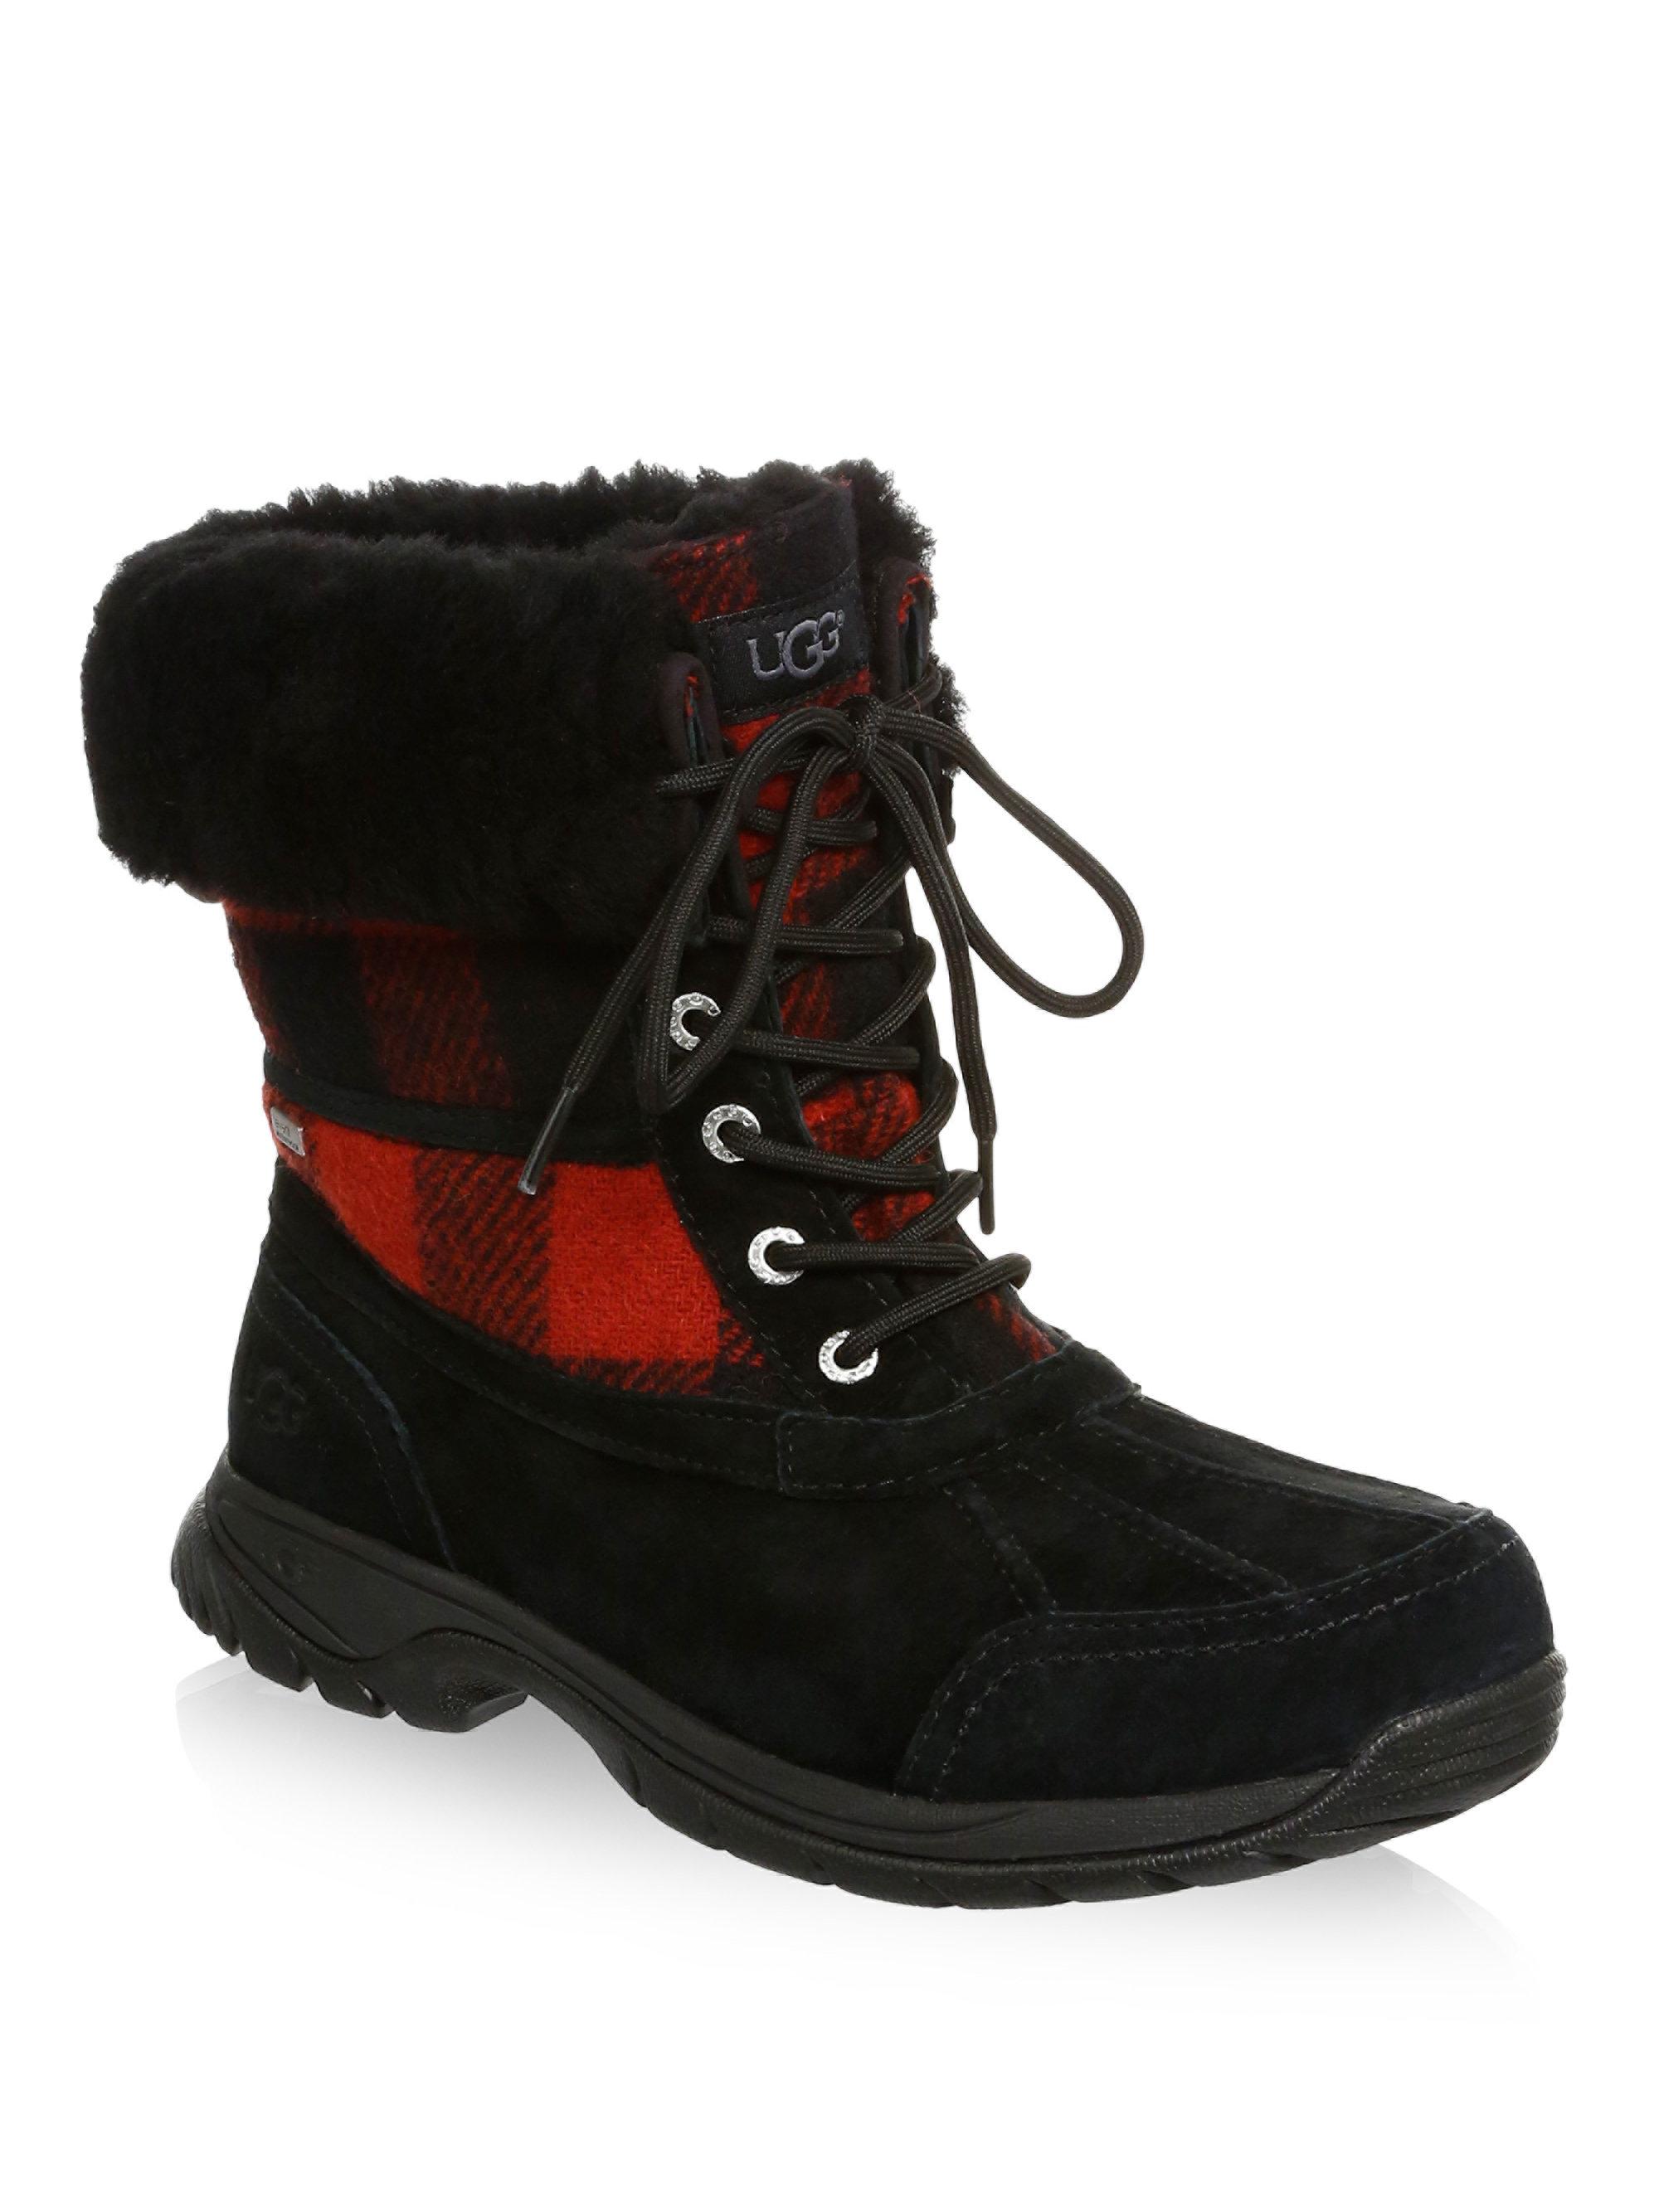 UGG Wool Butte Waterproof Buffalo Check Winter Boots in Black/Red (Black) |  Lyst